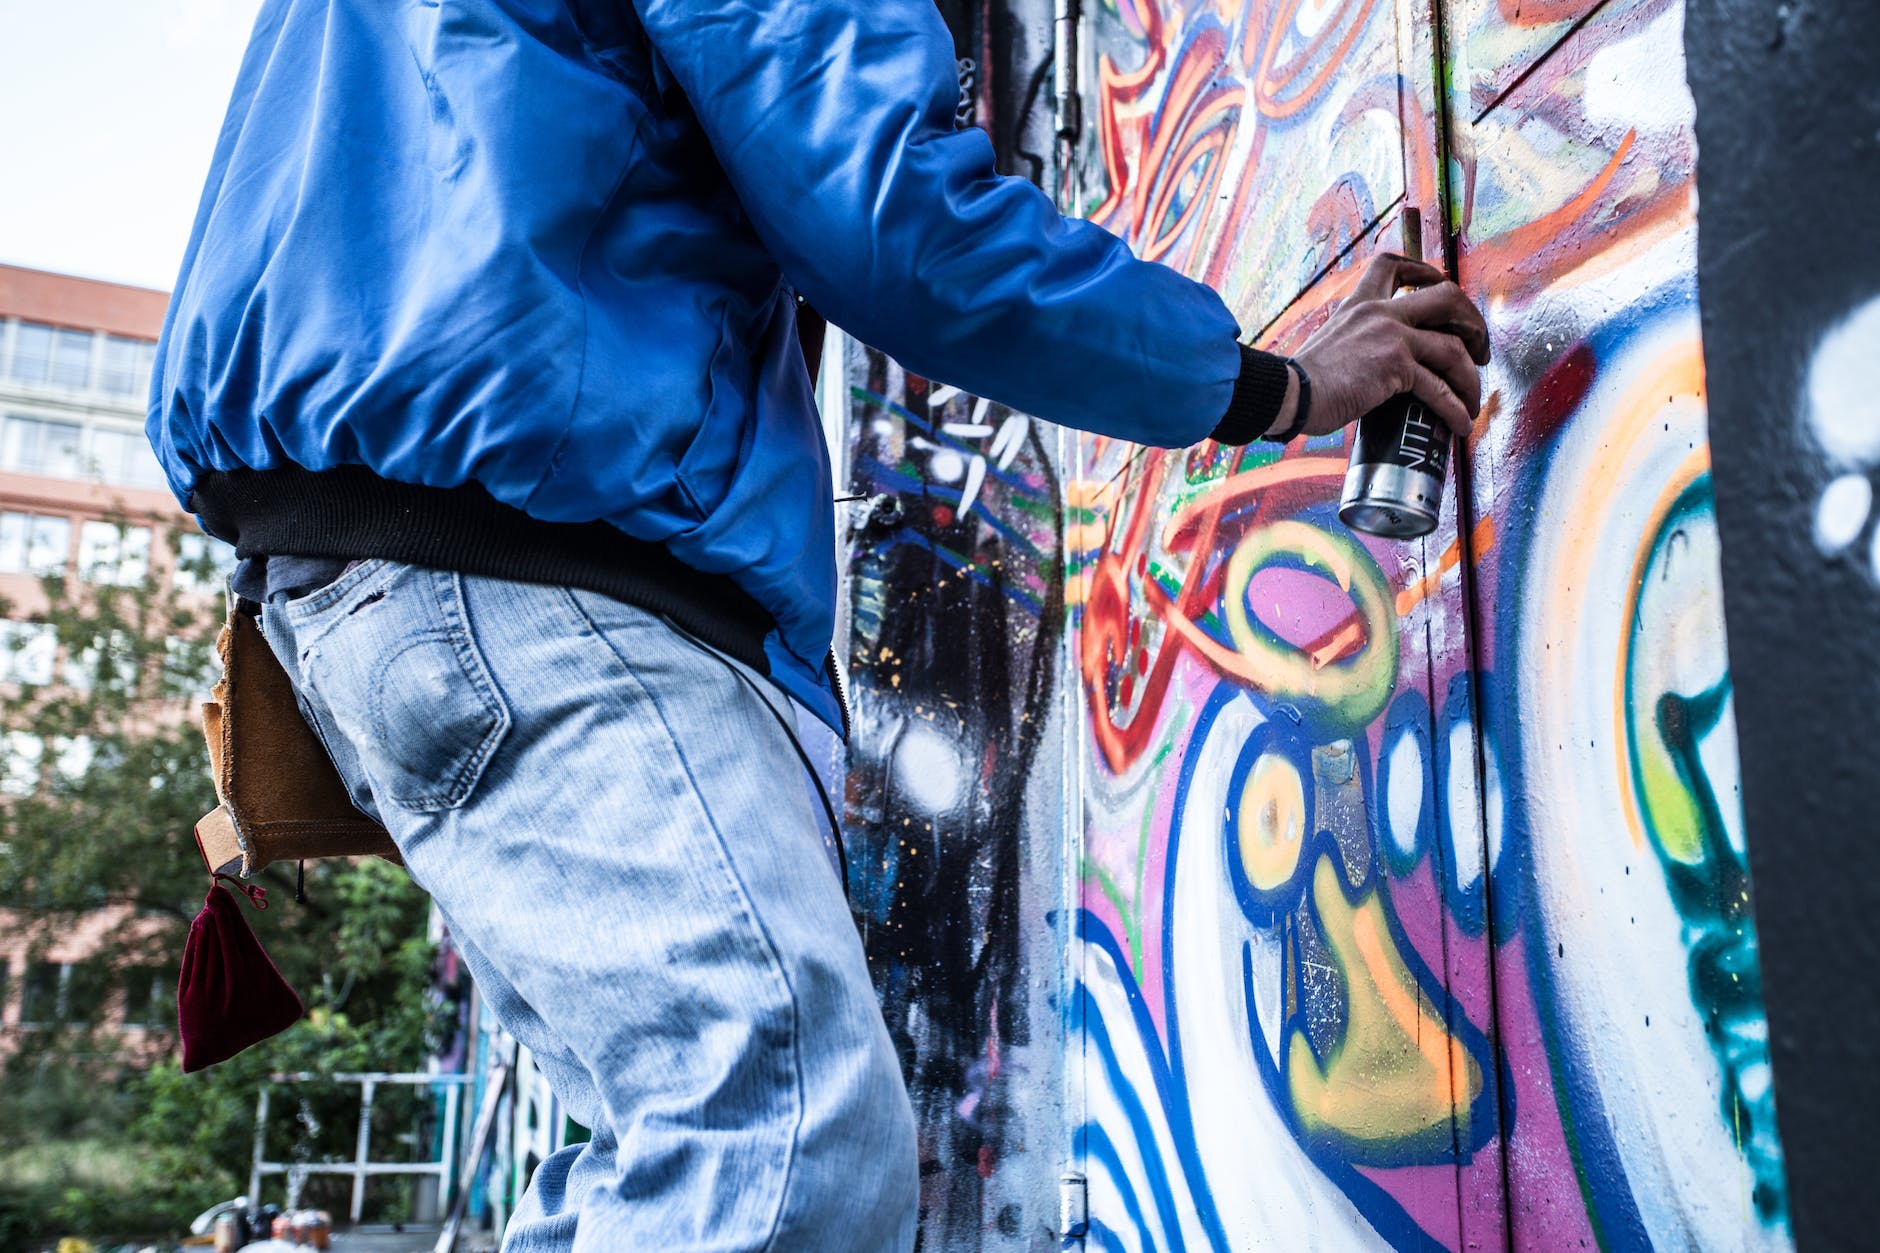 photo of person painting graffiti